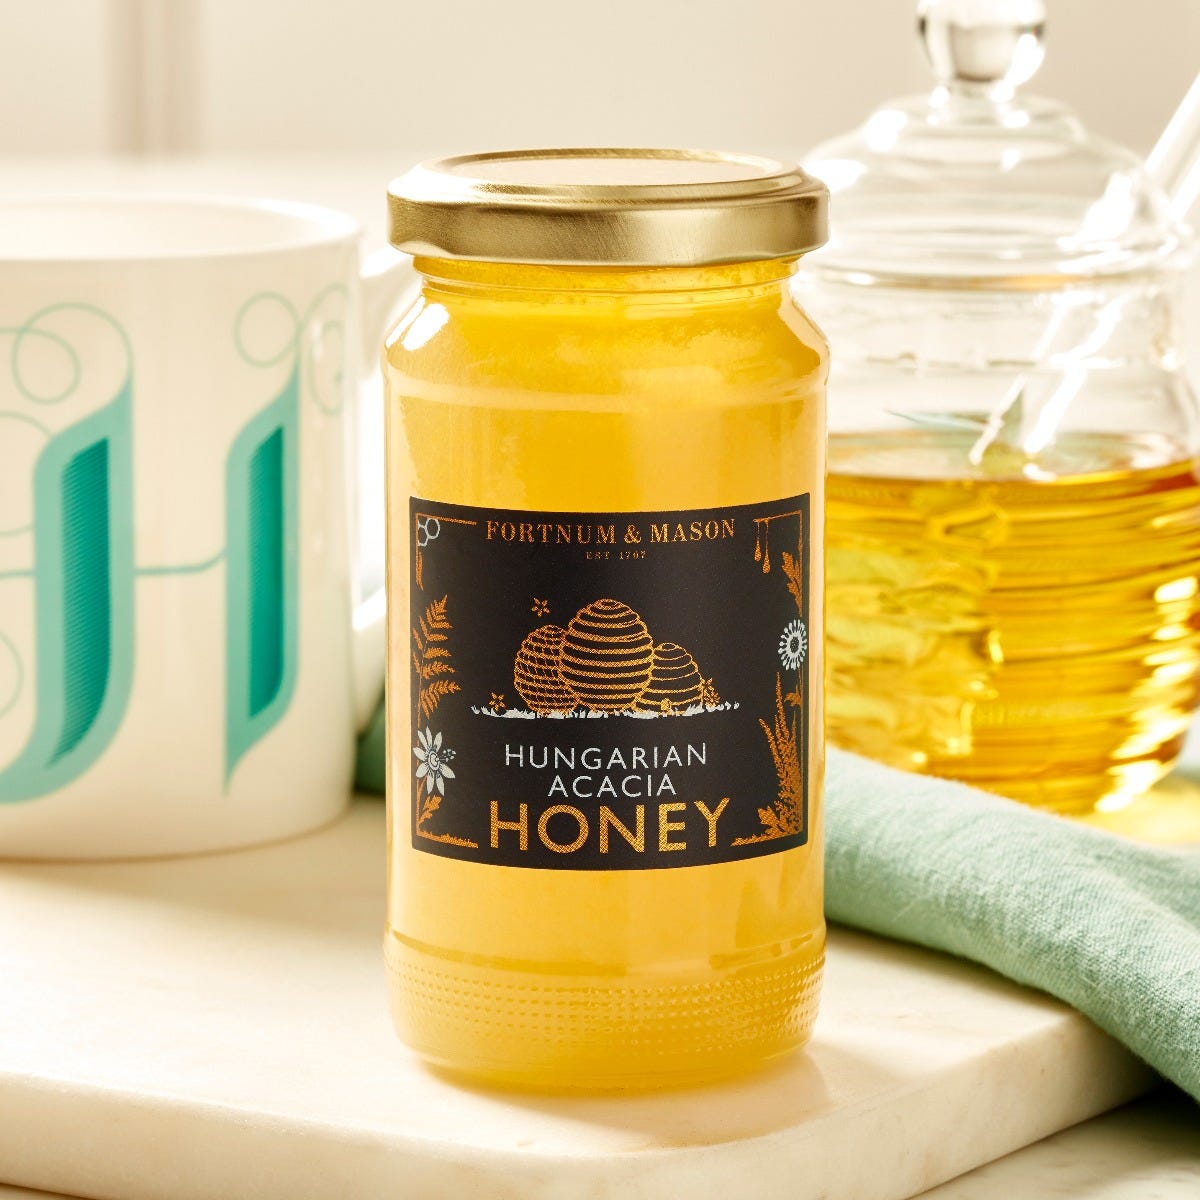 Hungarian Acacia Honey, 275g, Fortnum & Mason